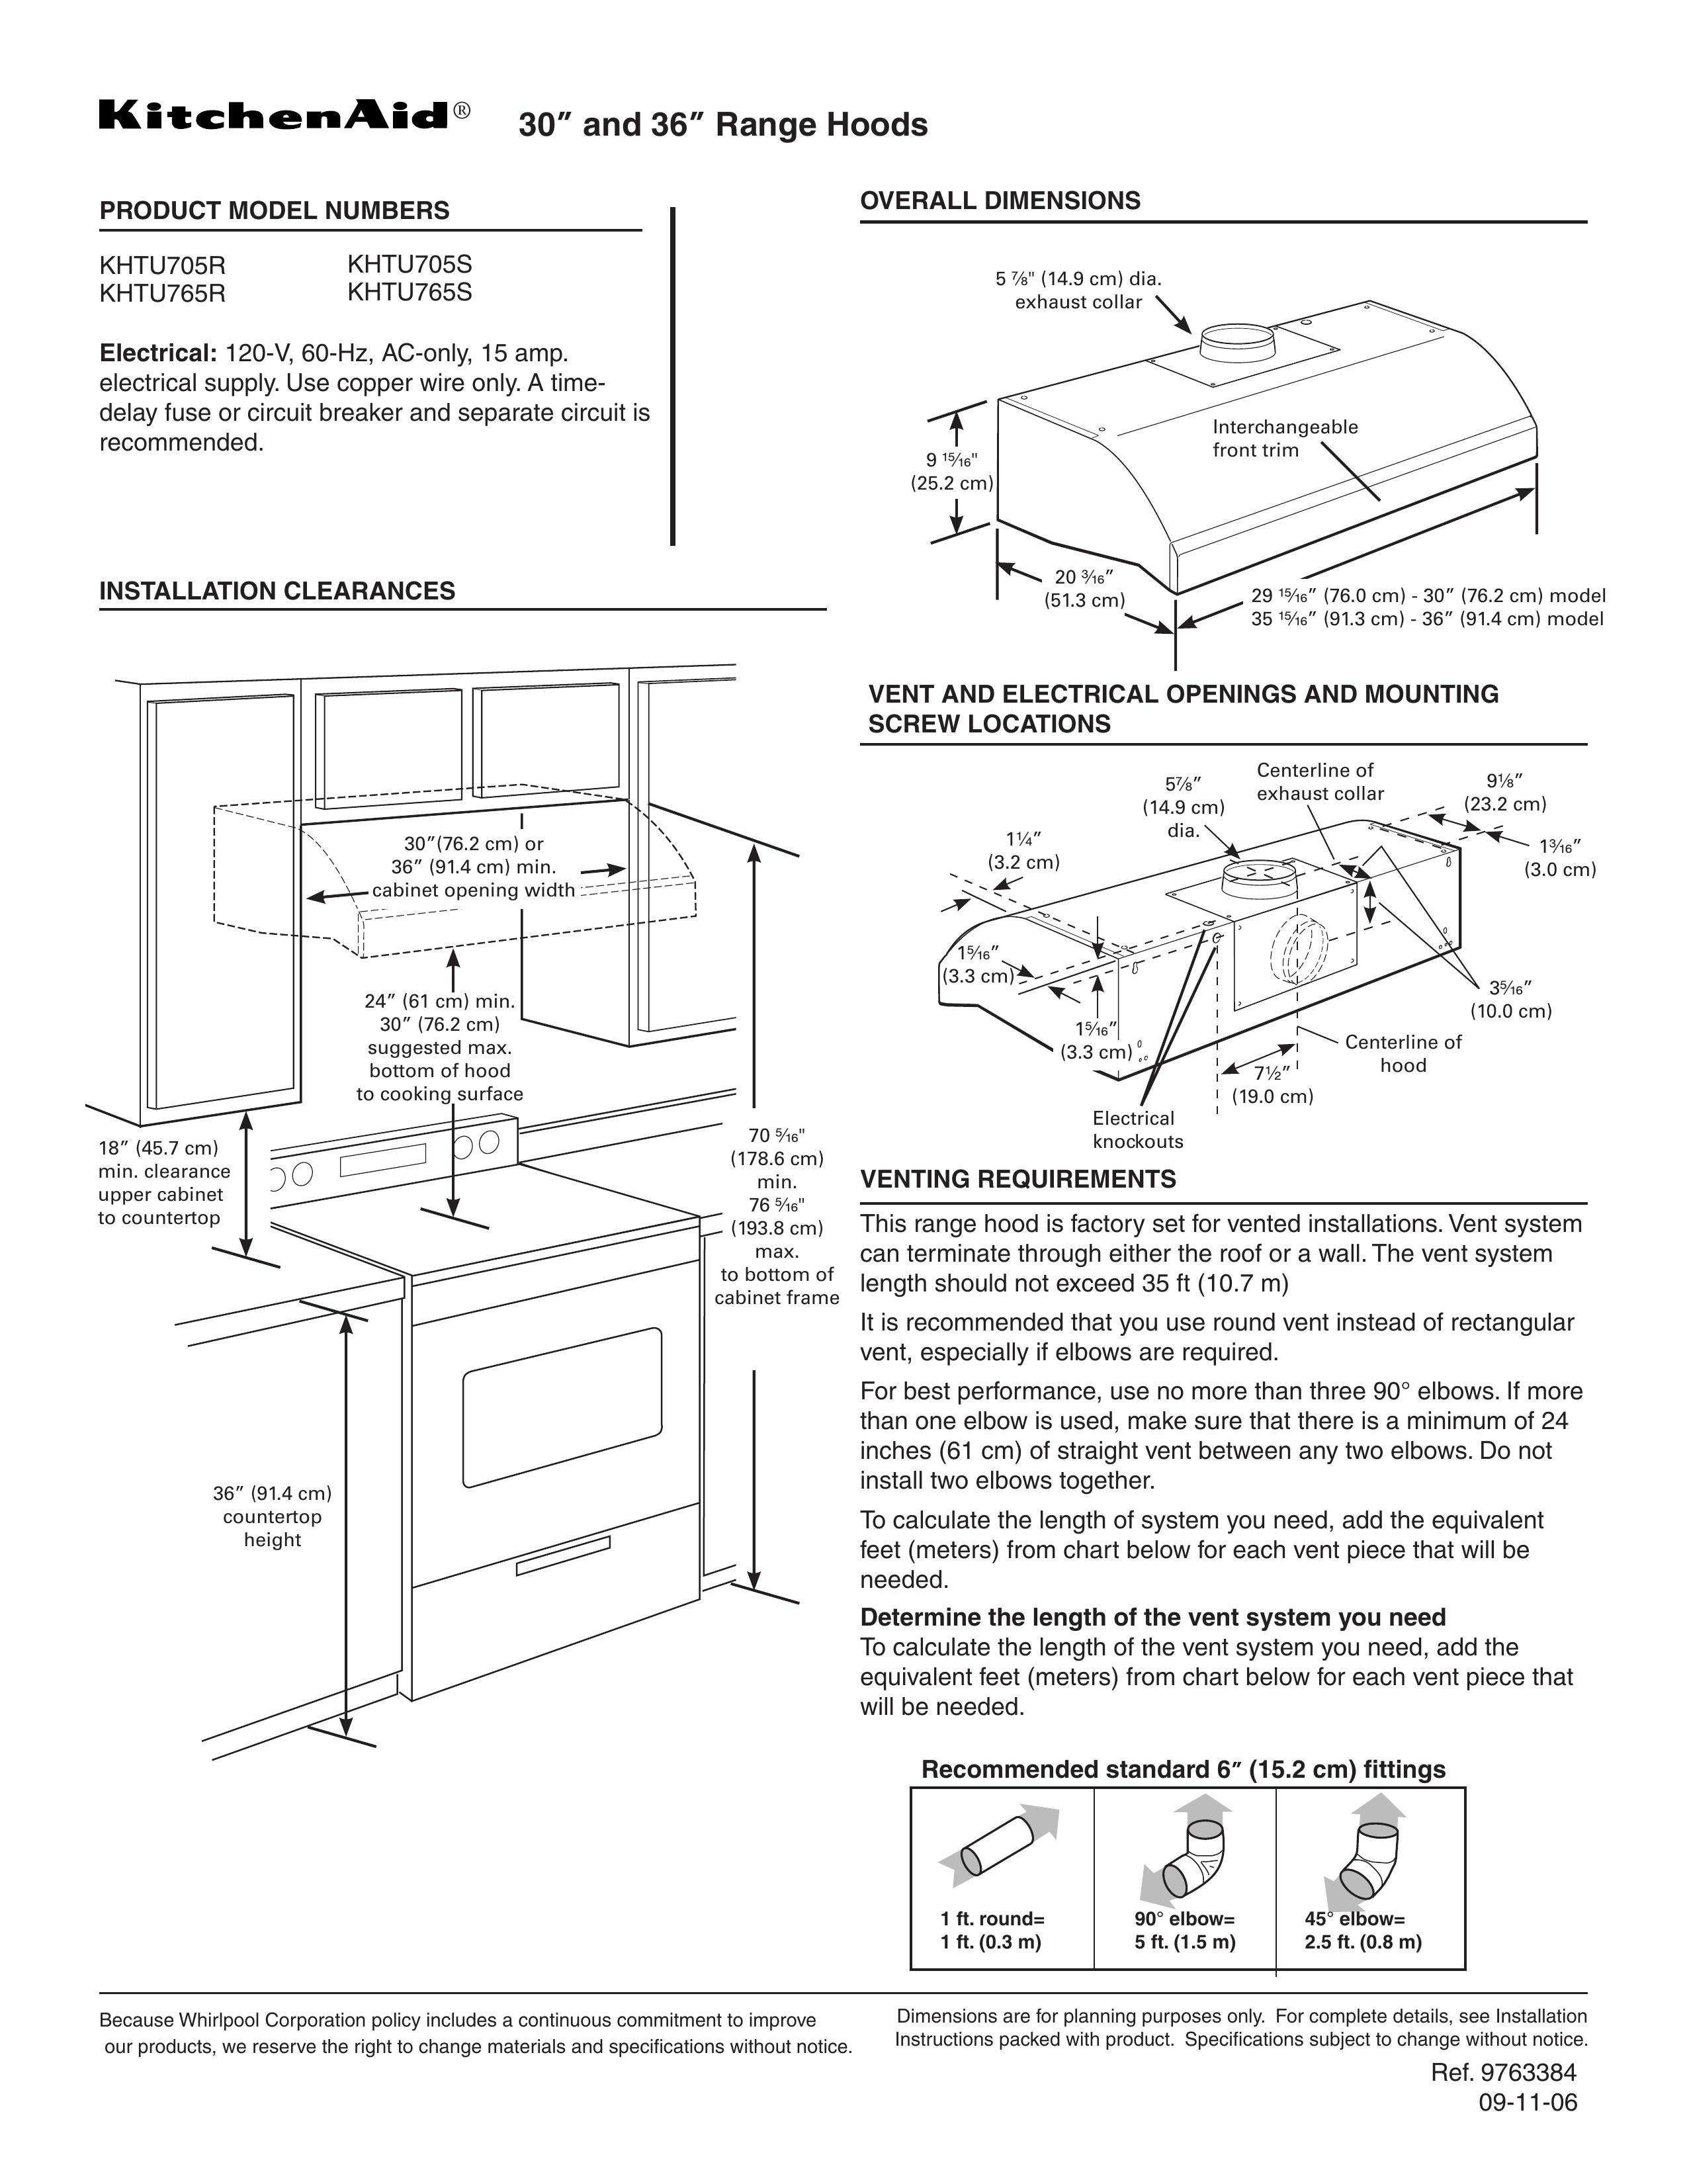 KitchenAid KHTU705S Ventilation Hood User Manual